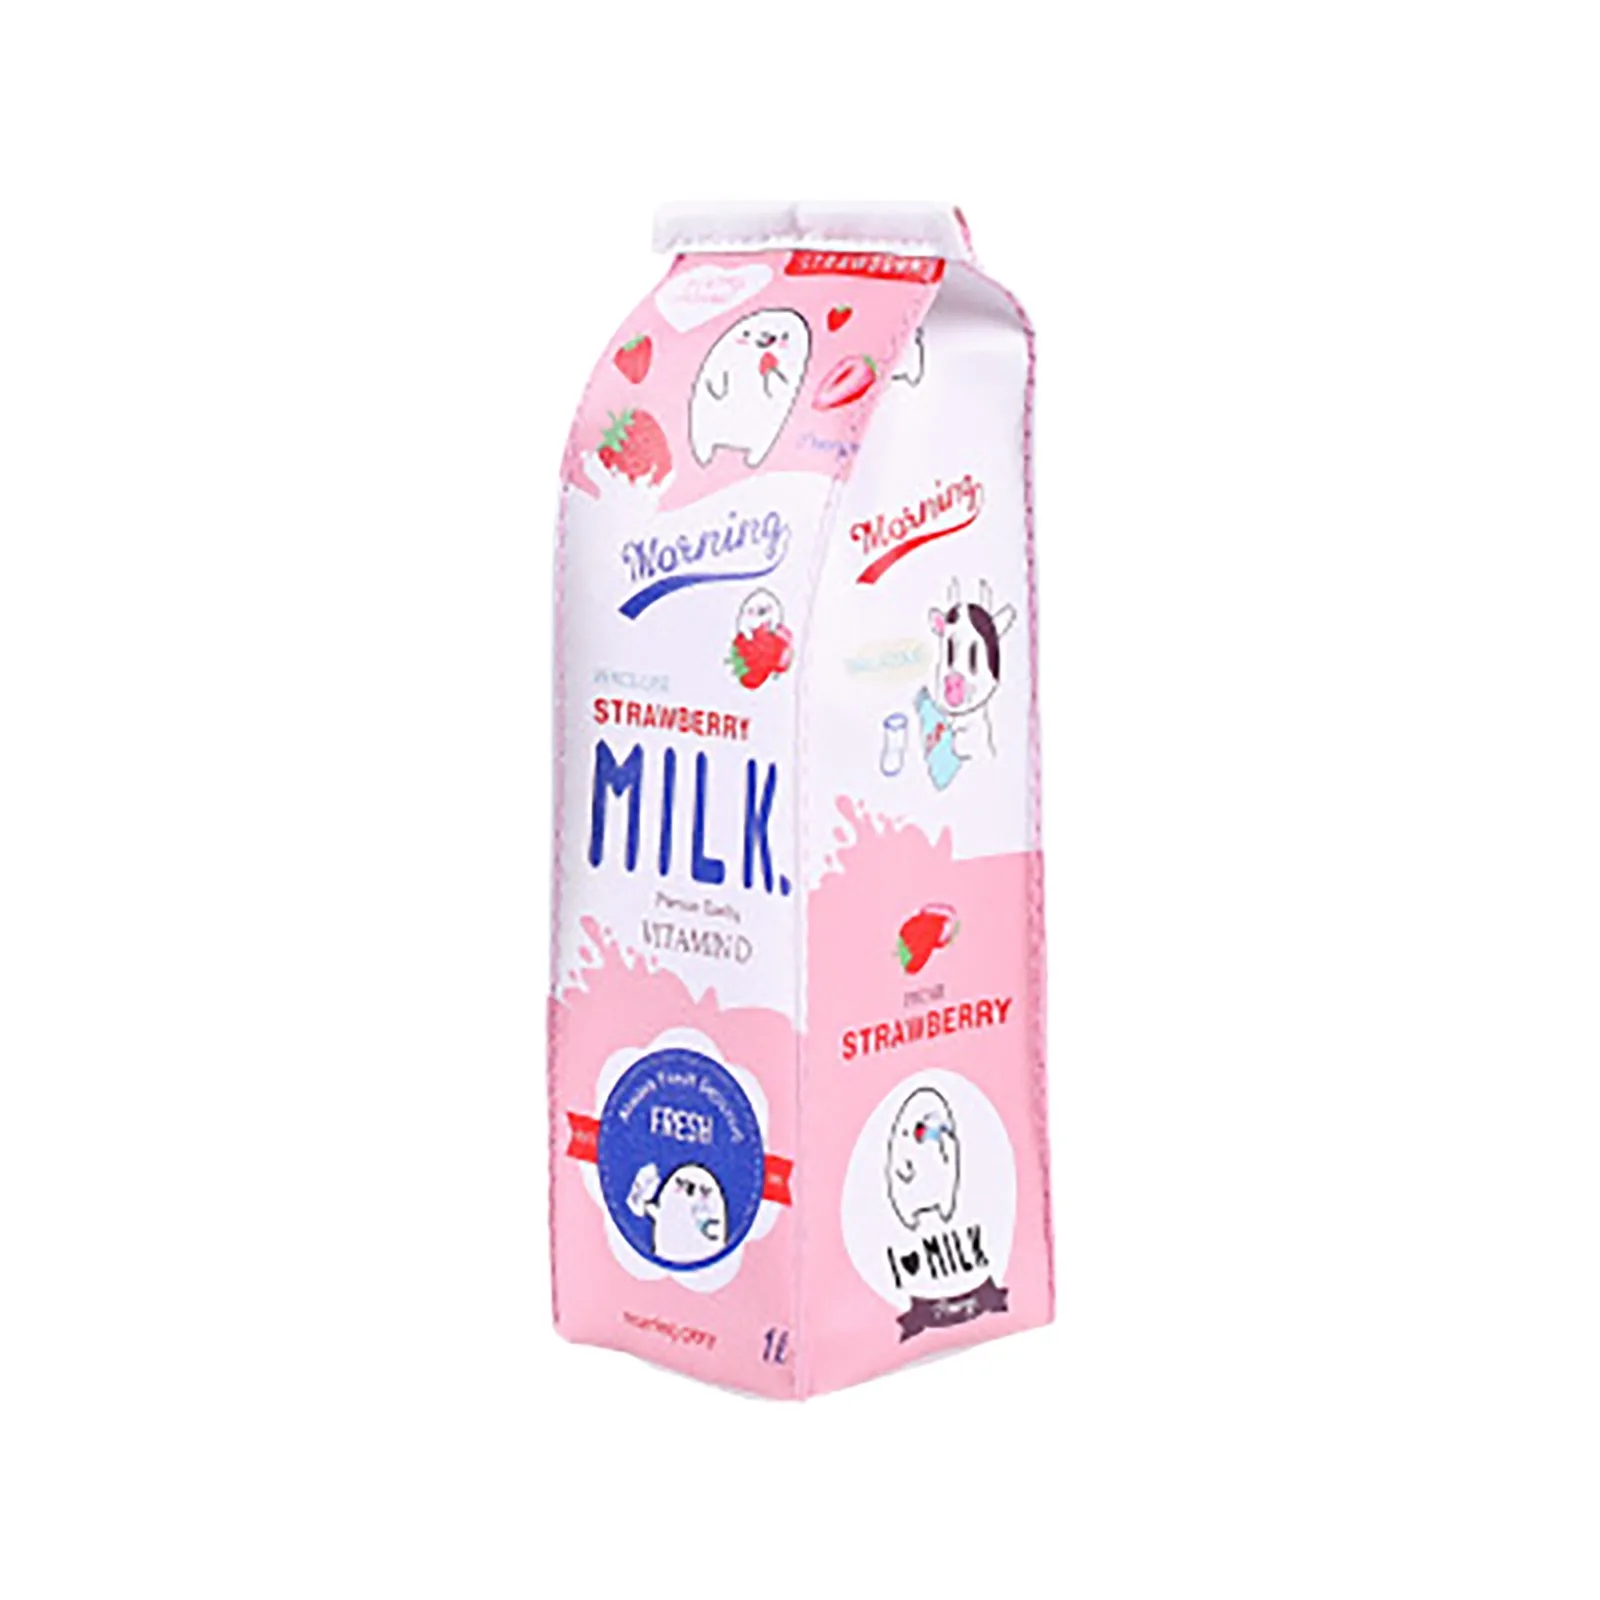 Пенал молоко. Пенал коробка молока. Пенал Milk. Милый пенал Milk. Dolce Milk пенал.